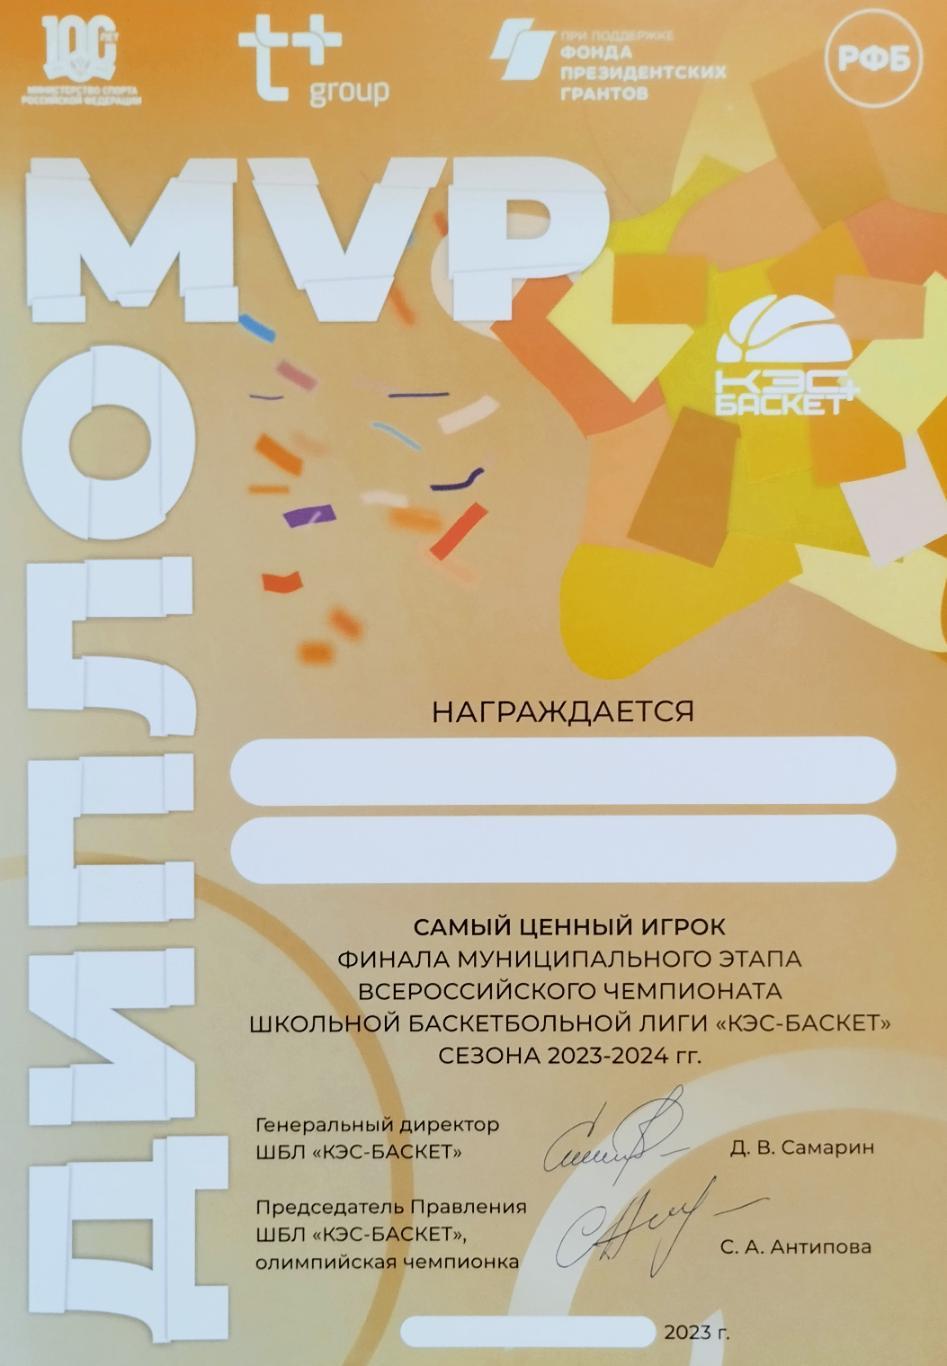 Диплом. MVP КЭС-БАСКЕТ. Сезон 2023-2024.